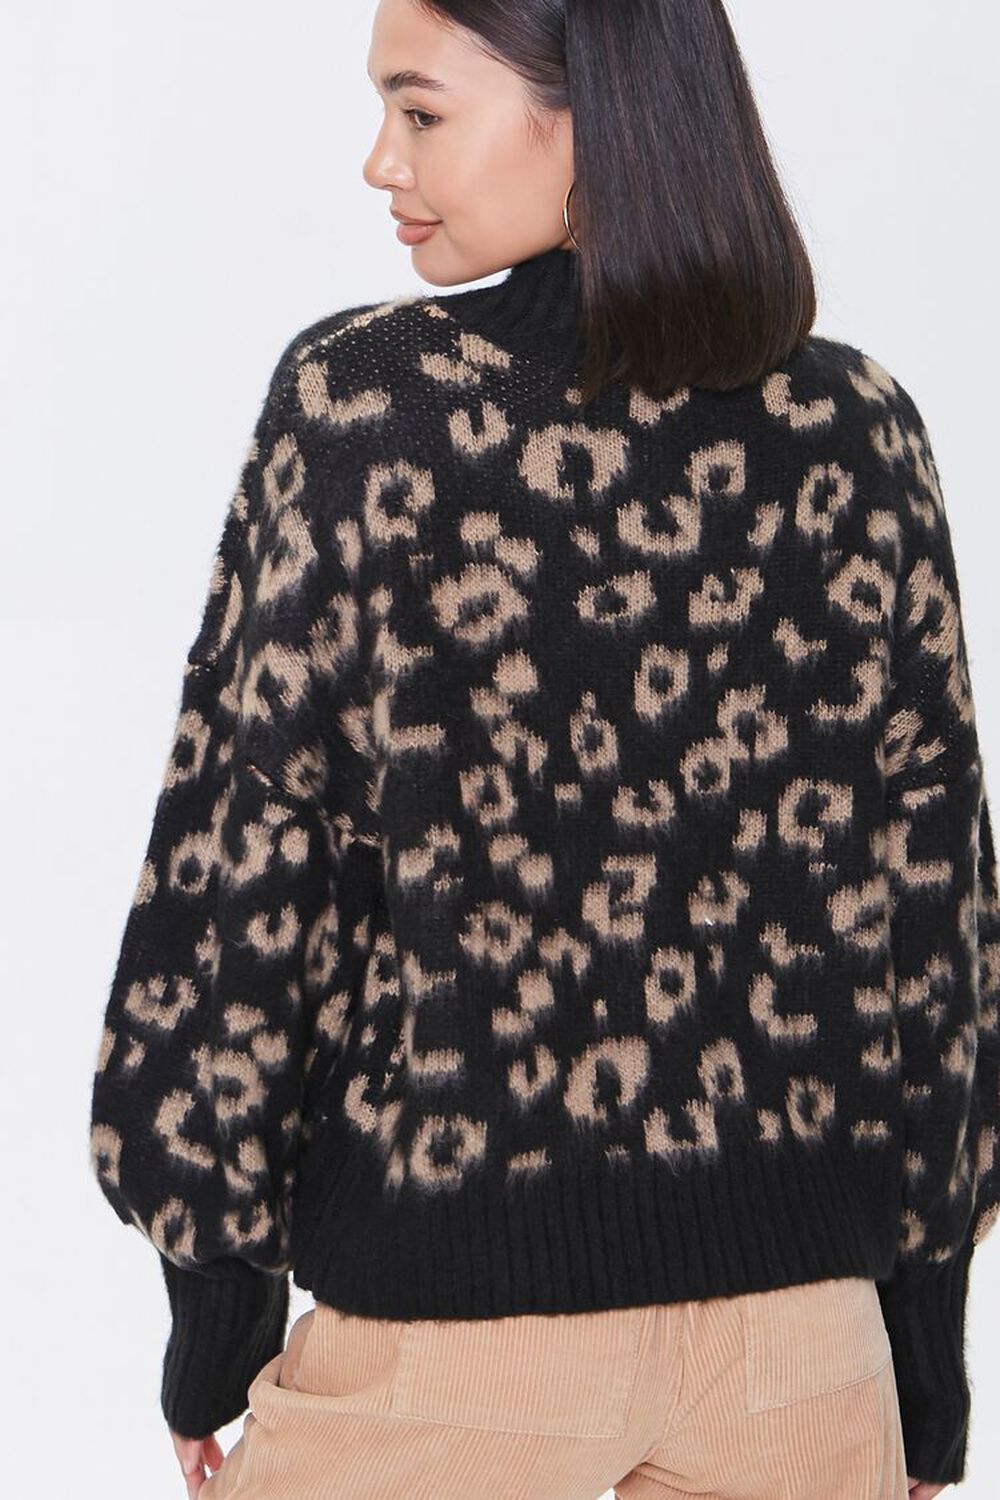 BLACK/BLUE Fuzzy Leopard Print Sweater, image 3